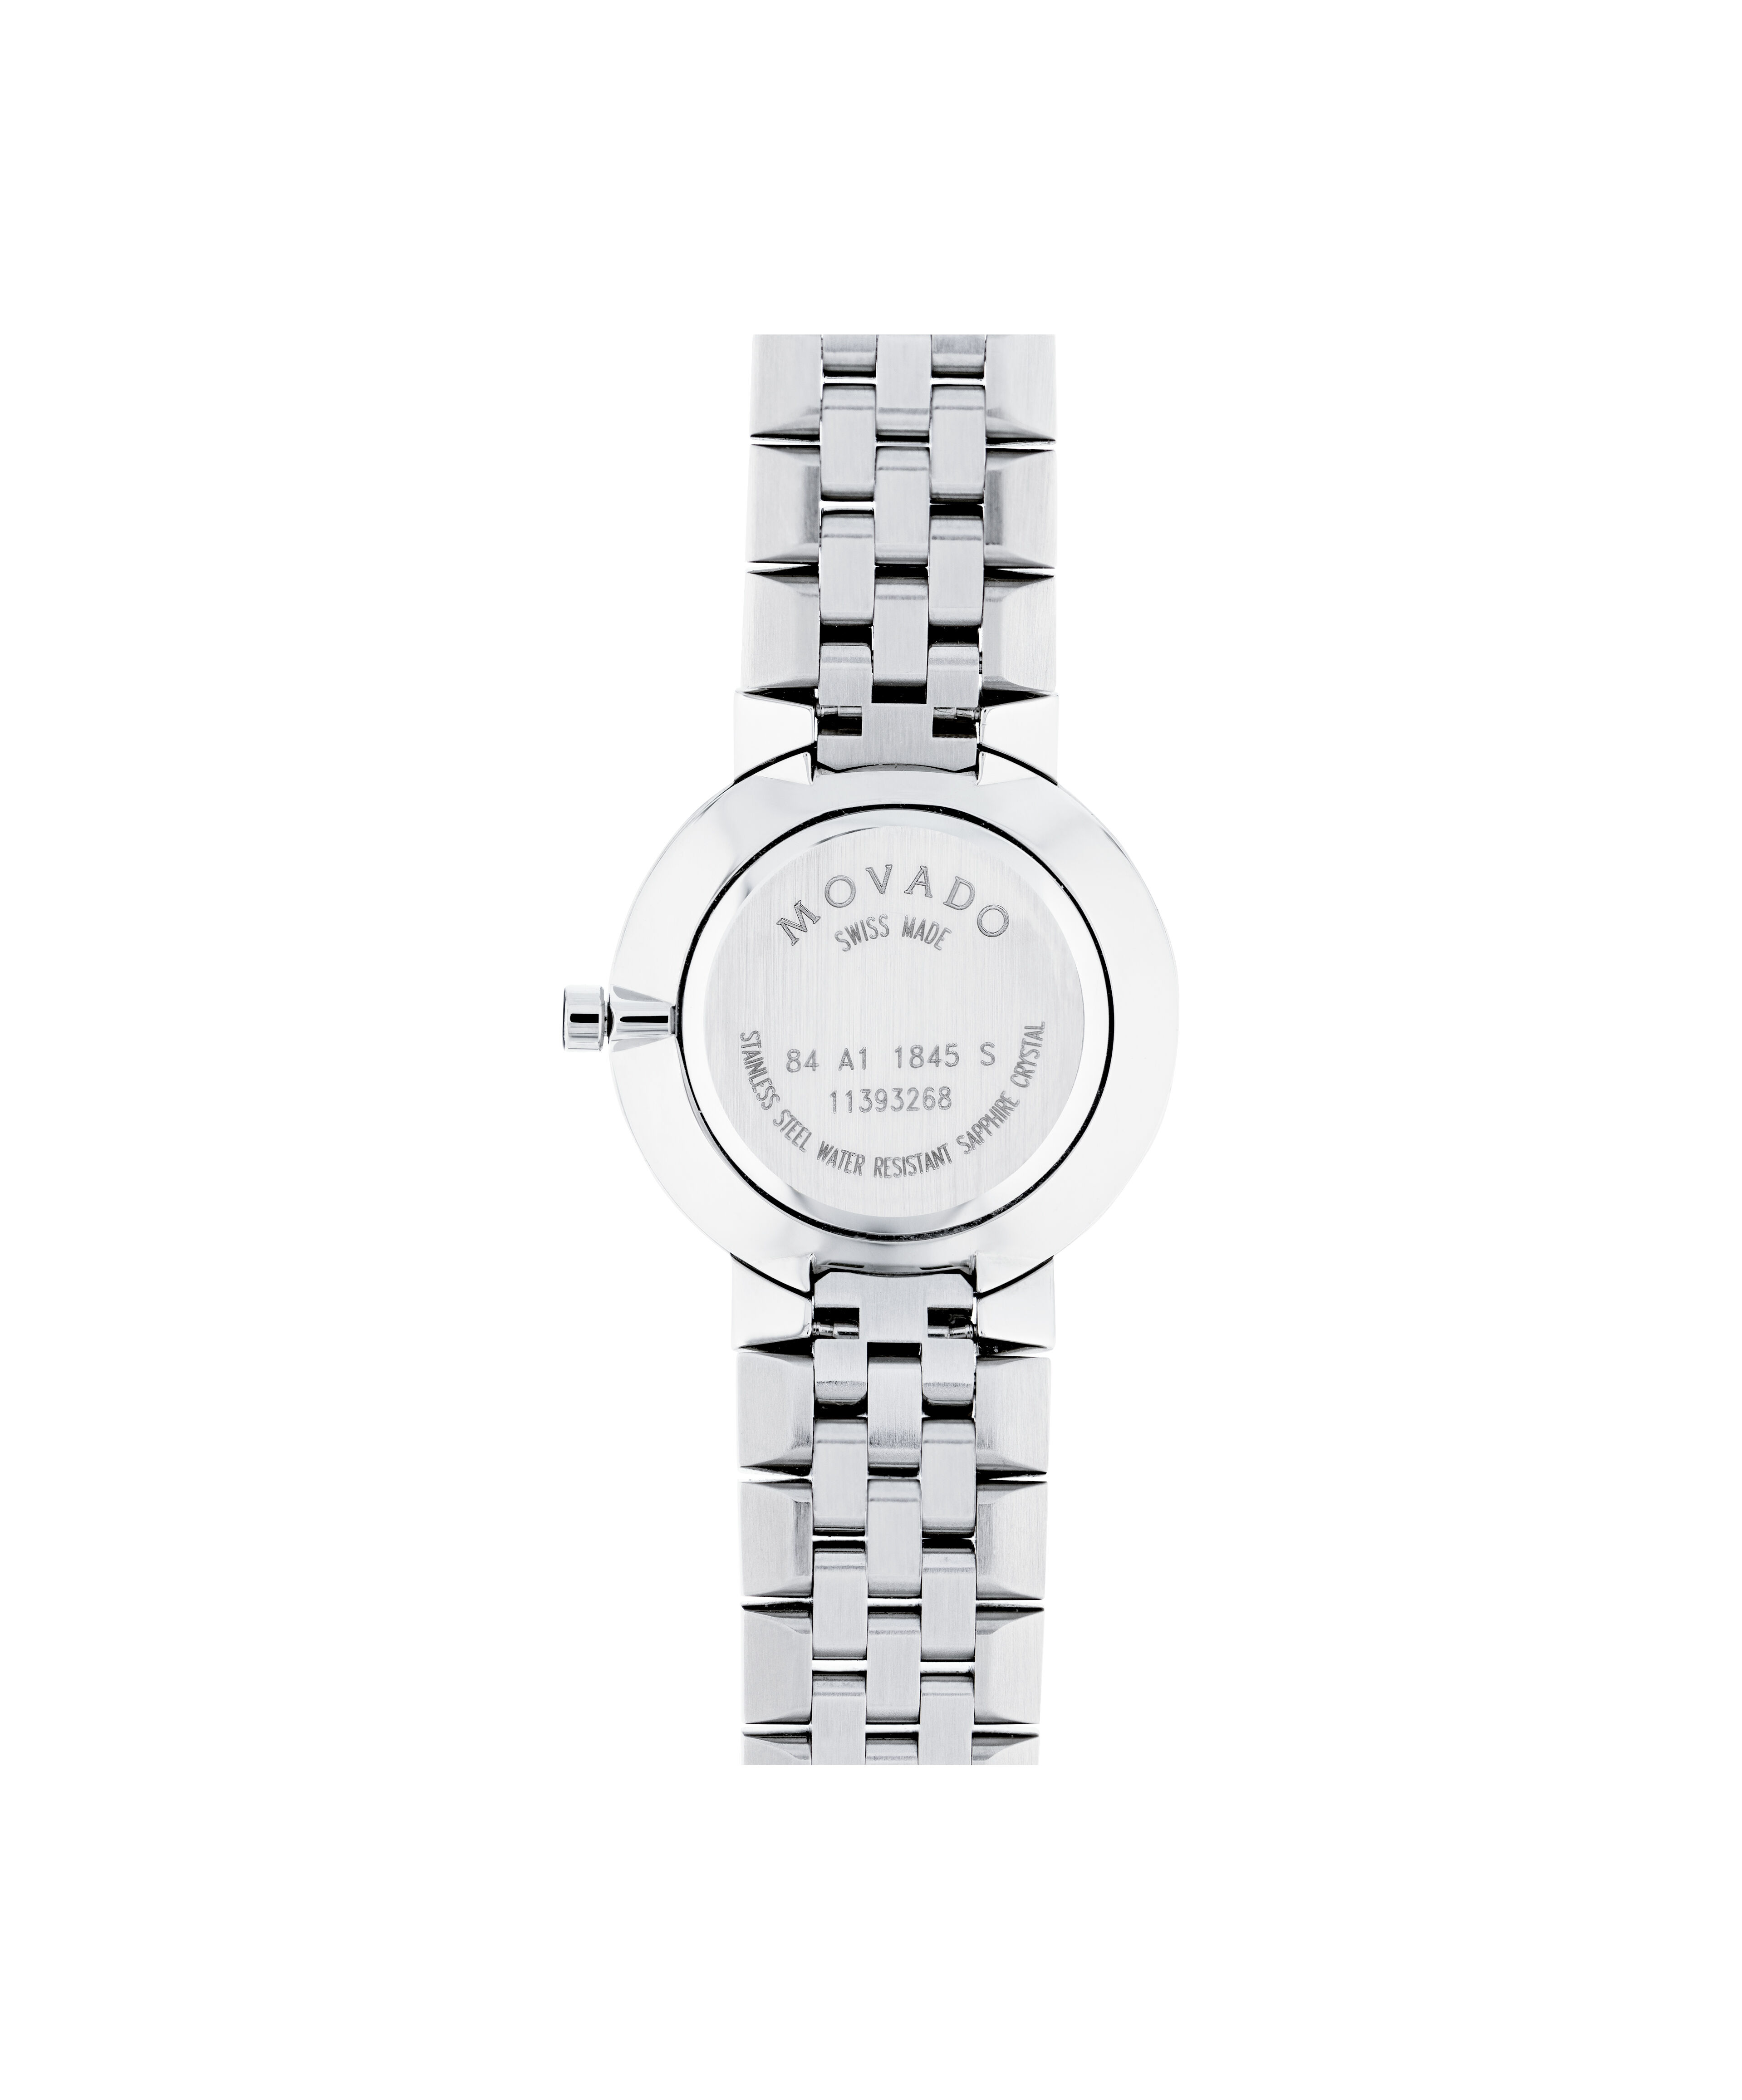 Movado Vintage Movado - dress watch - manual winding 17 Jewel - chroned case -1960-1969